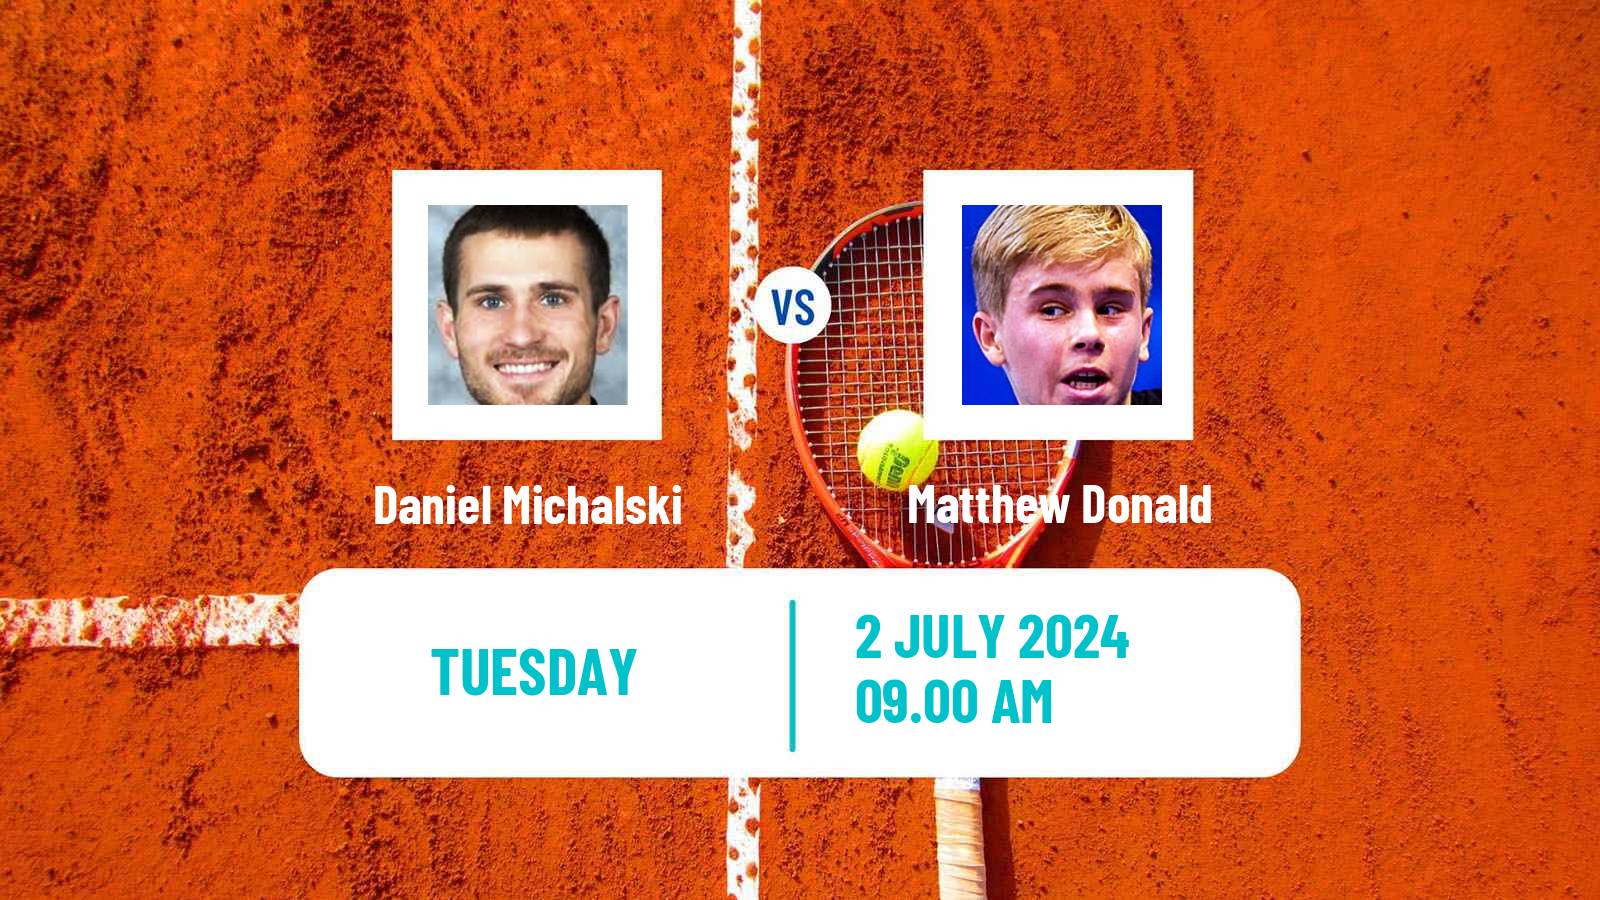 Tennis ITF M25 Marburg Men Daniel Michalski - Matthew Donald